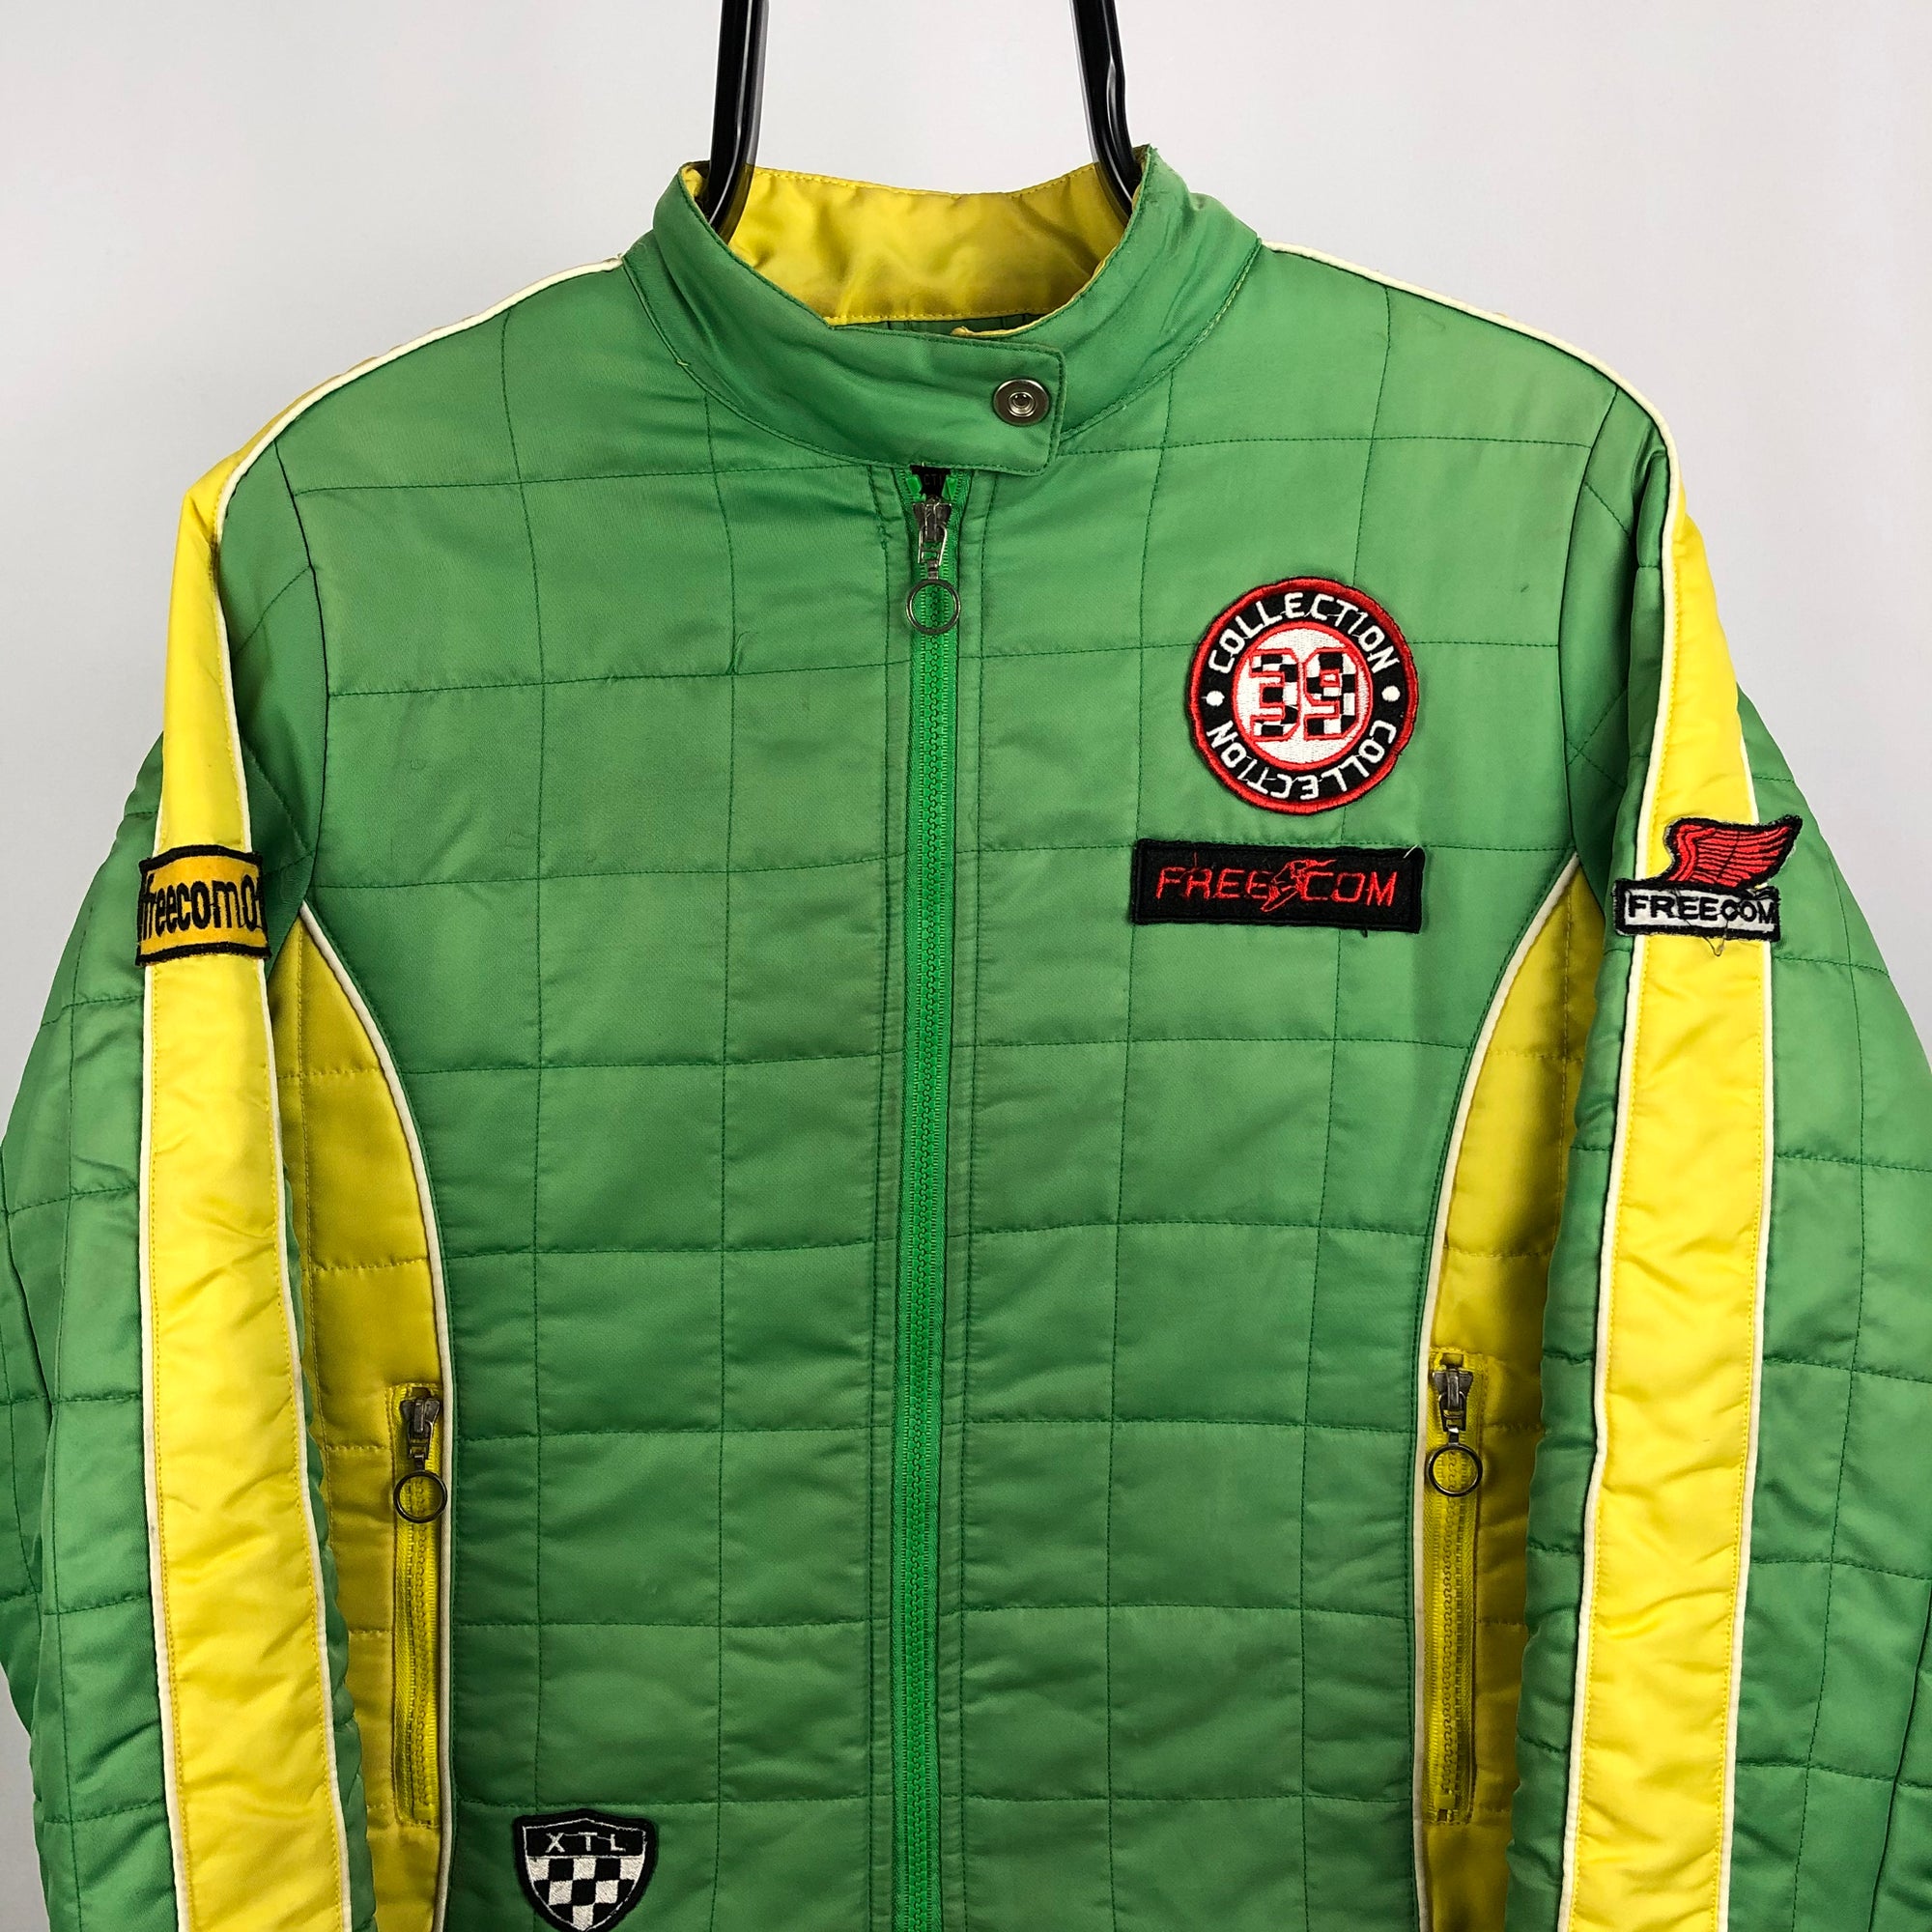 Vintage Racing Jacket in Green/Yellow - Men's XS/Women's Small